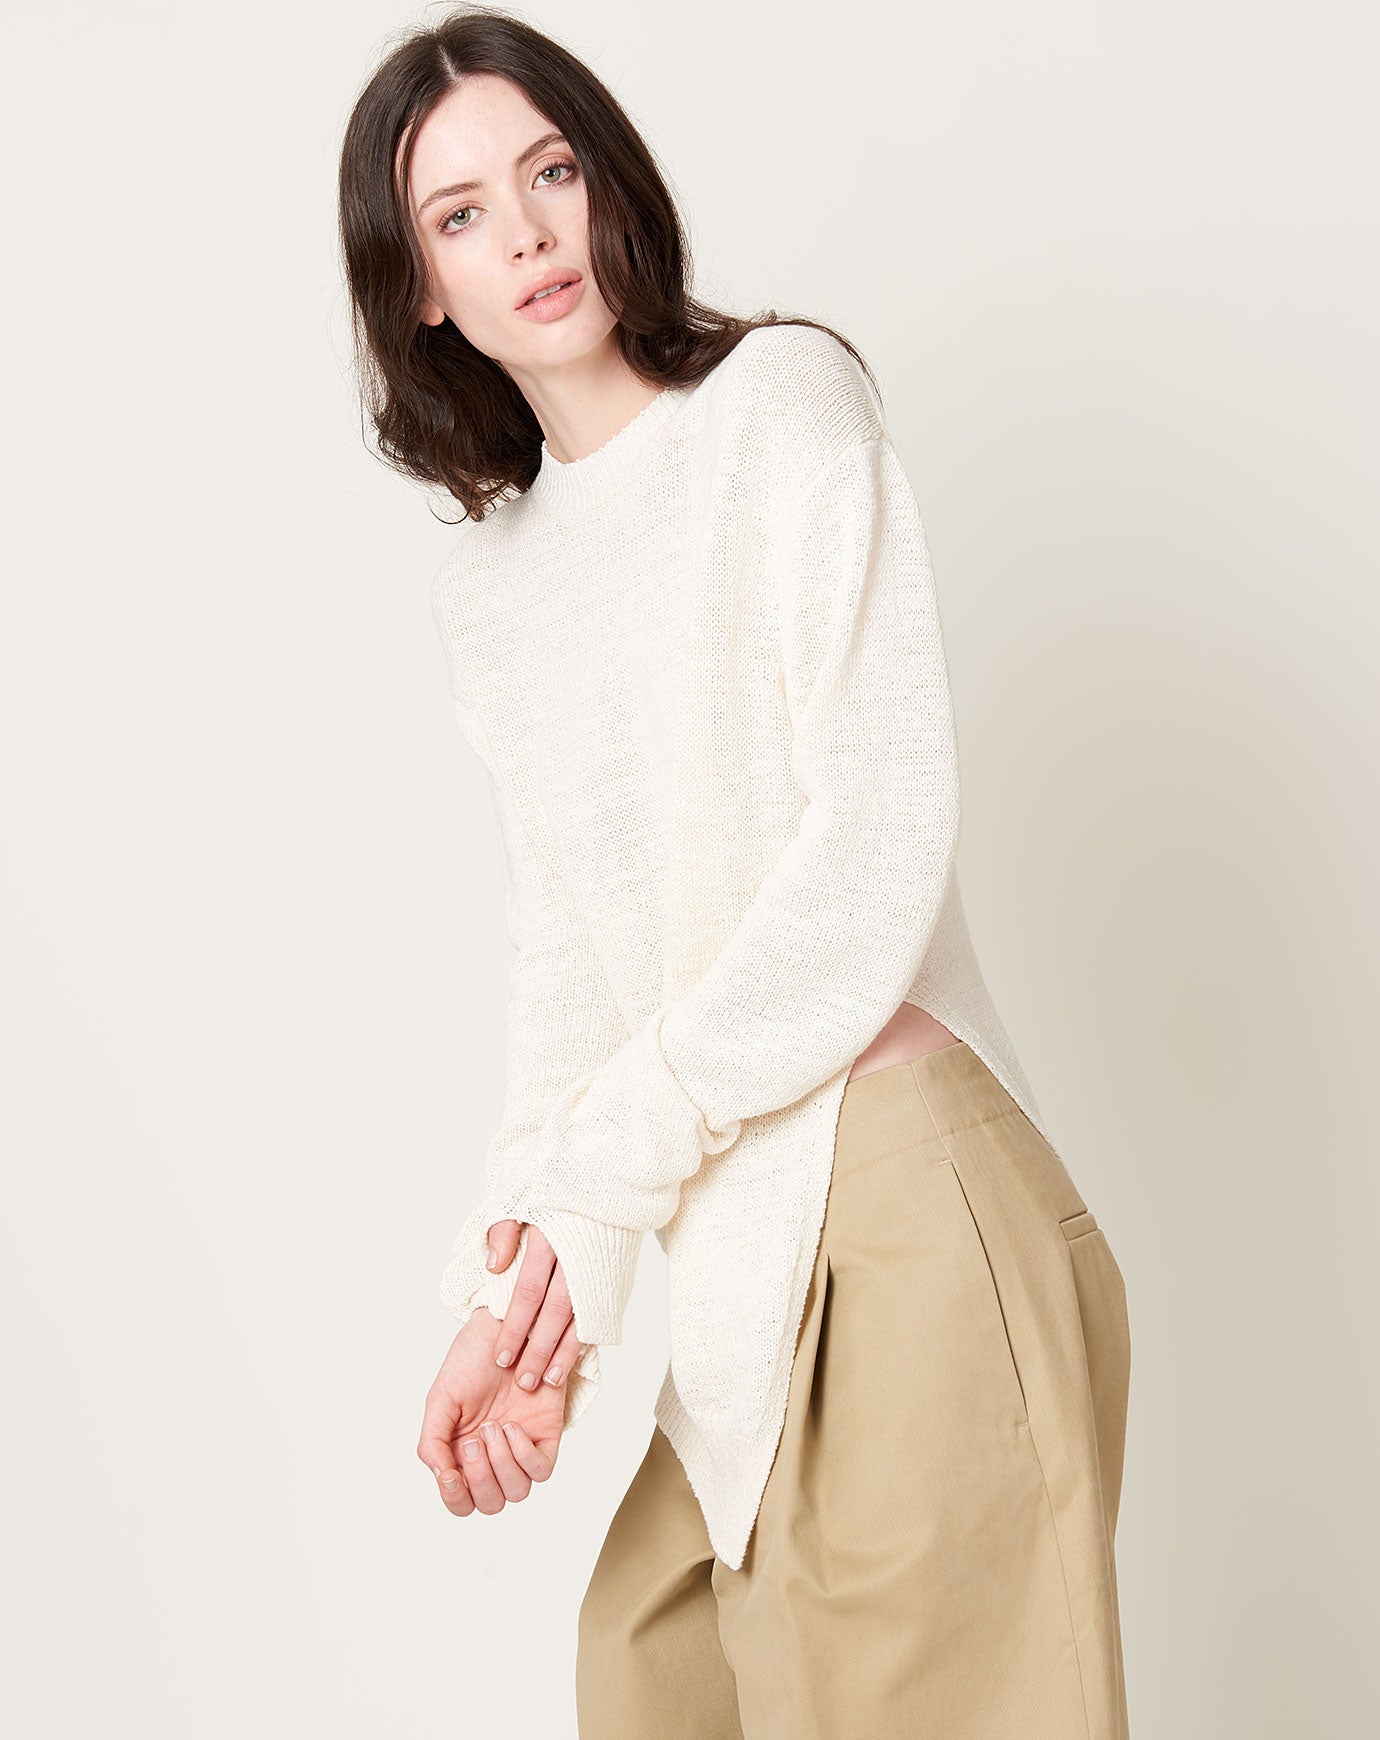 Sanpo Sweater in Cream | Studio Nicholson | Covet + Lou | Covet + Lou